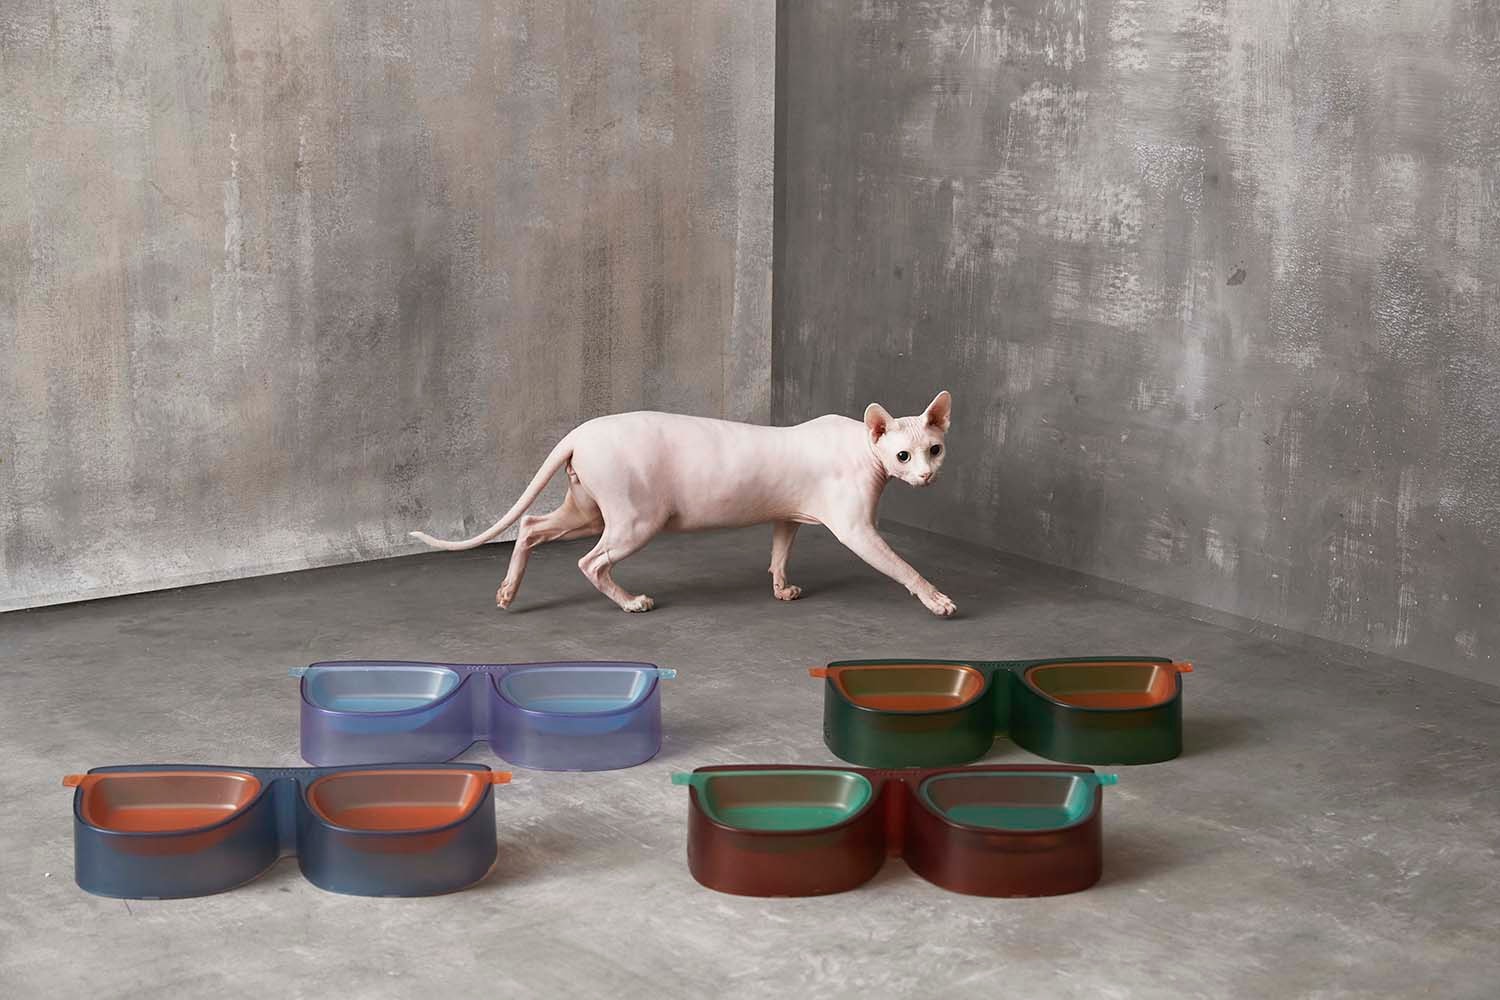 Maogoublue 全新「HEICHAO」系列猫狗喂食碗